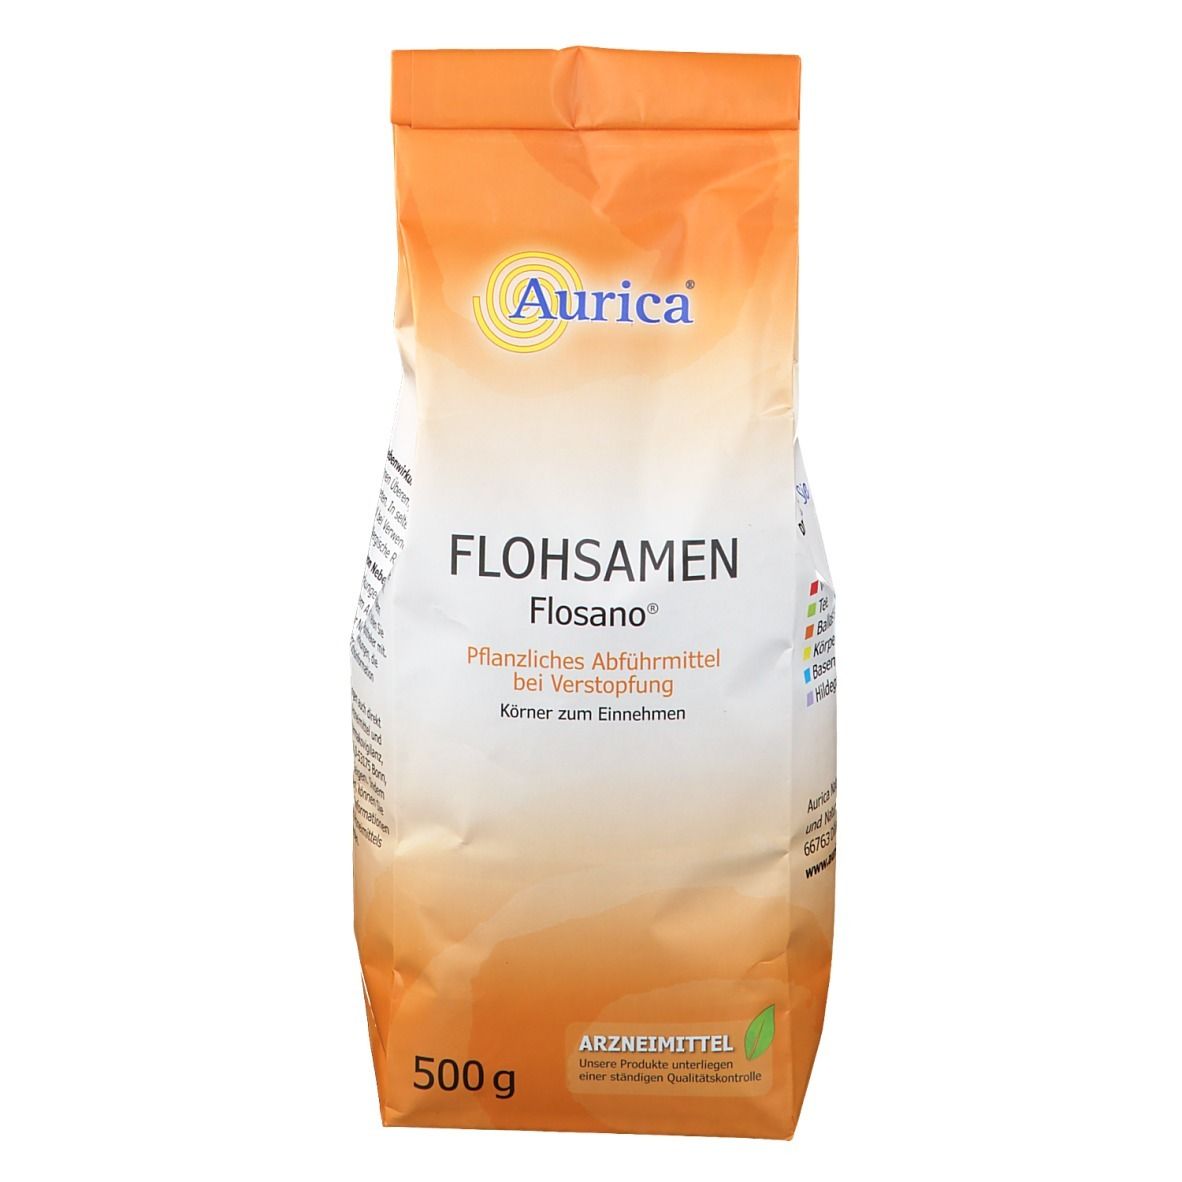 Aurica® Flohsamen Flosano®